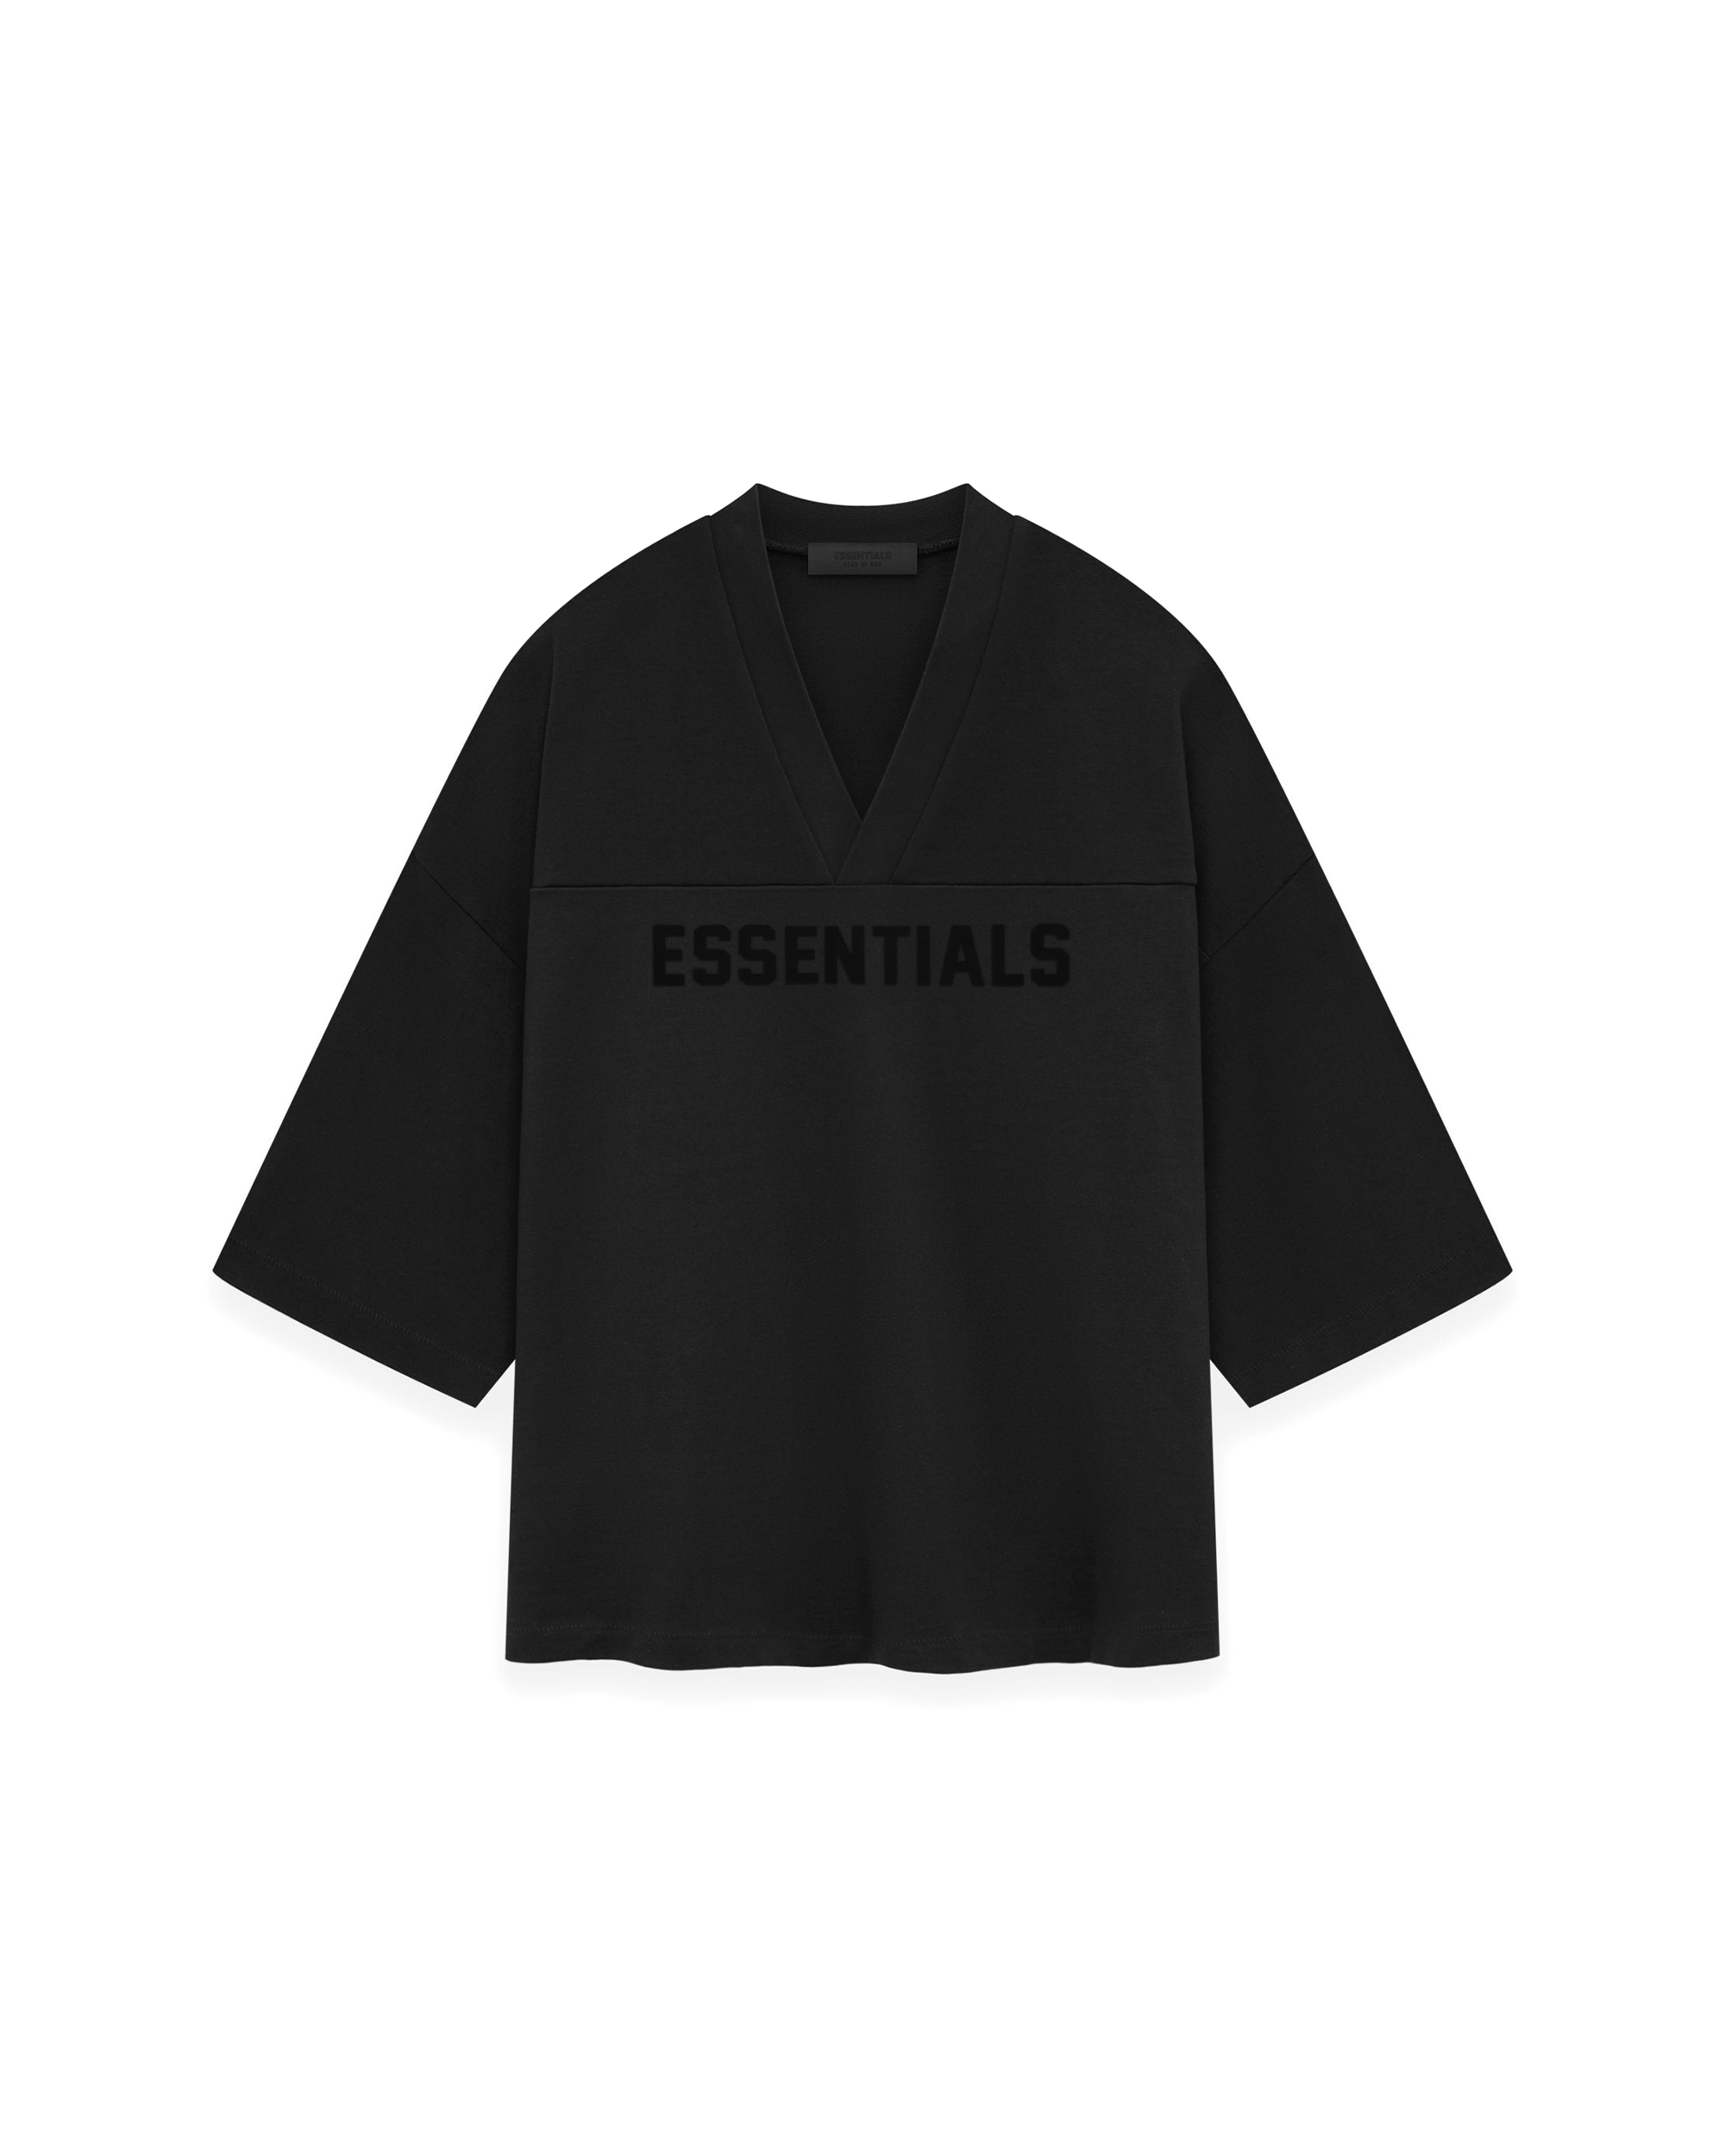 Football T-shirt - Jet Black